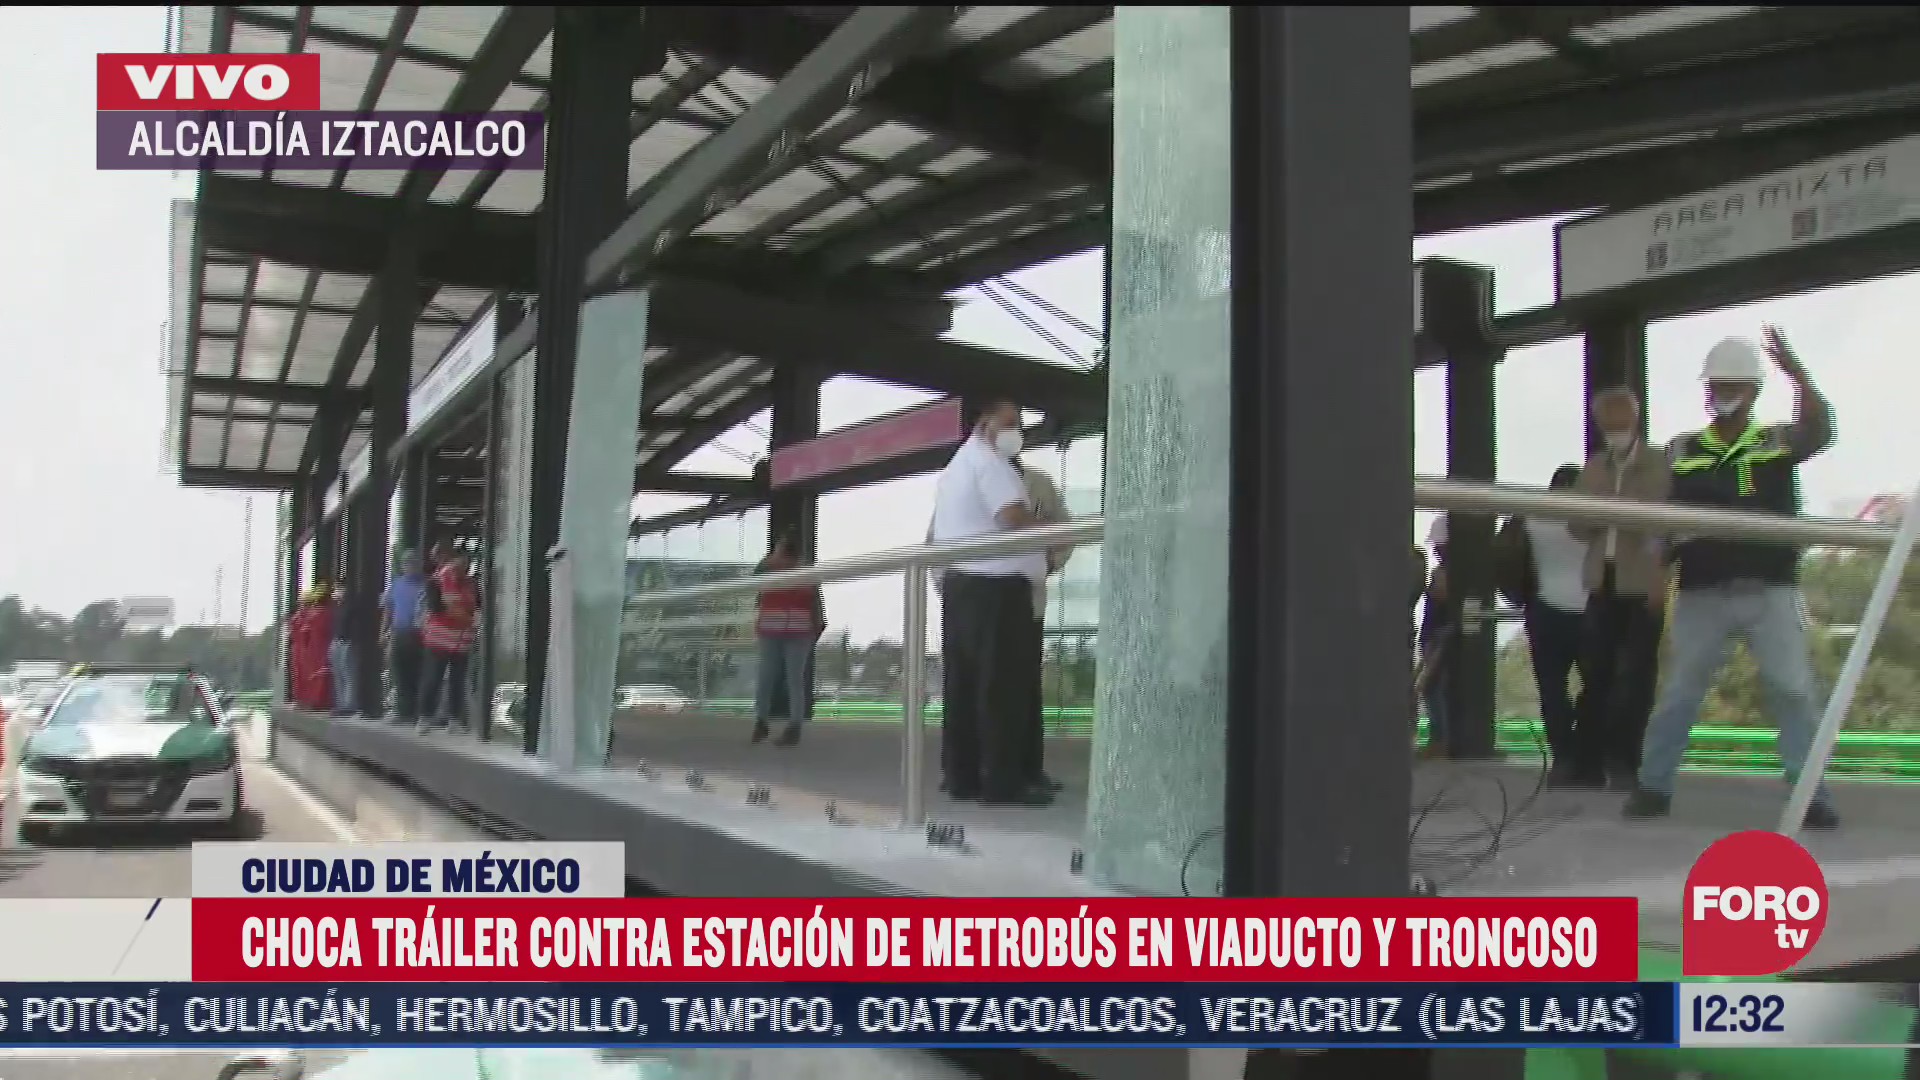 choca trailer contra estacion de metrobus de la alcaldia iztacalco